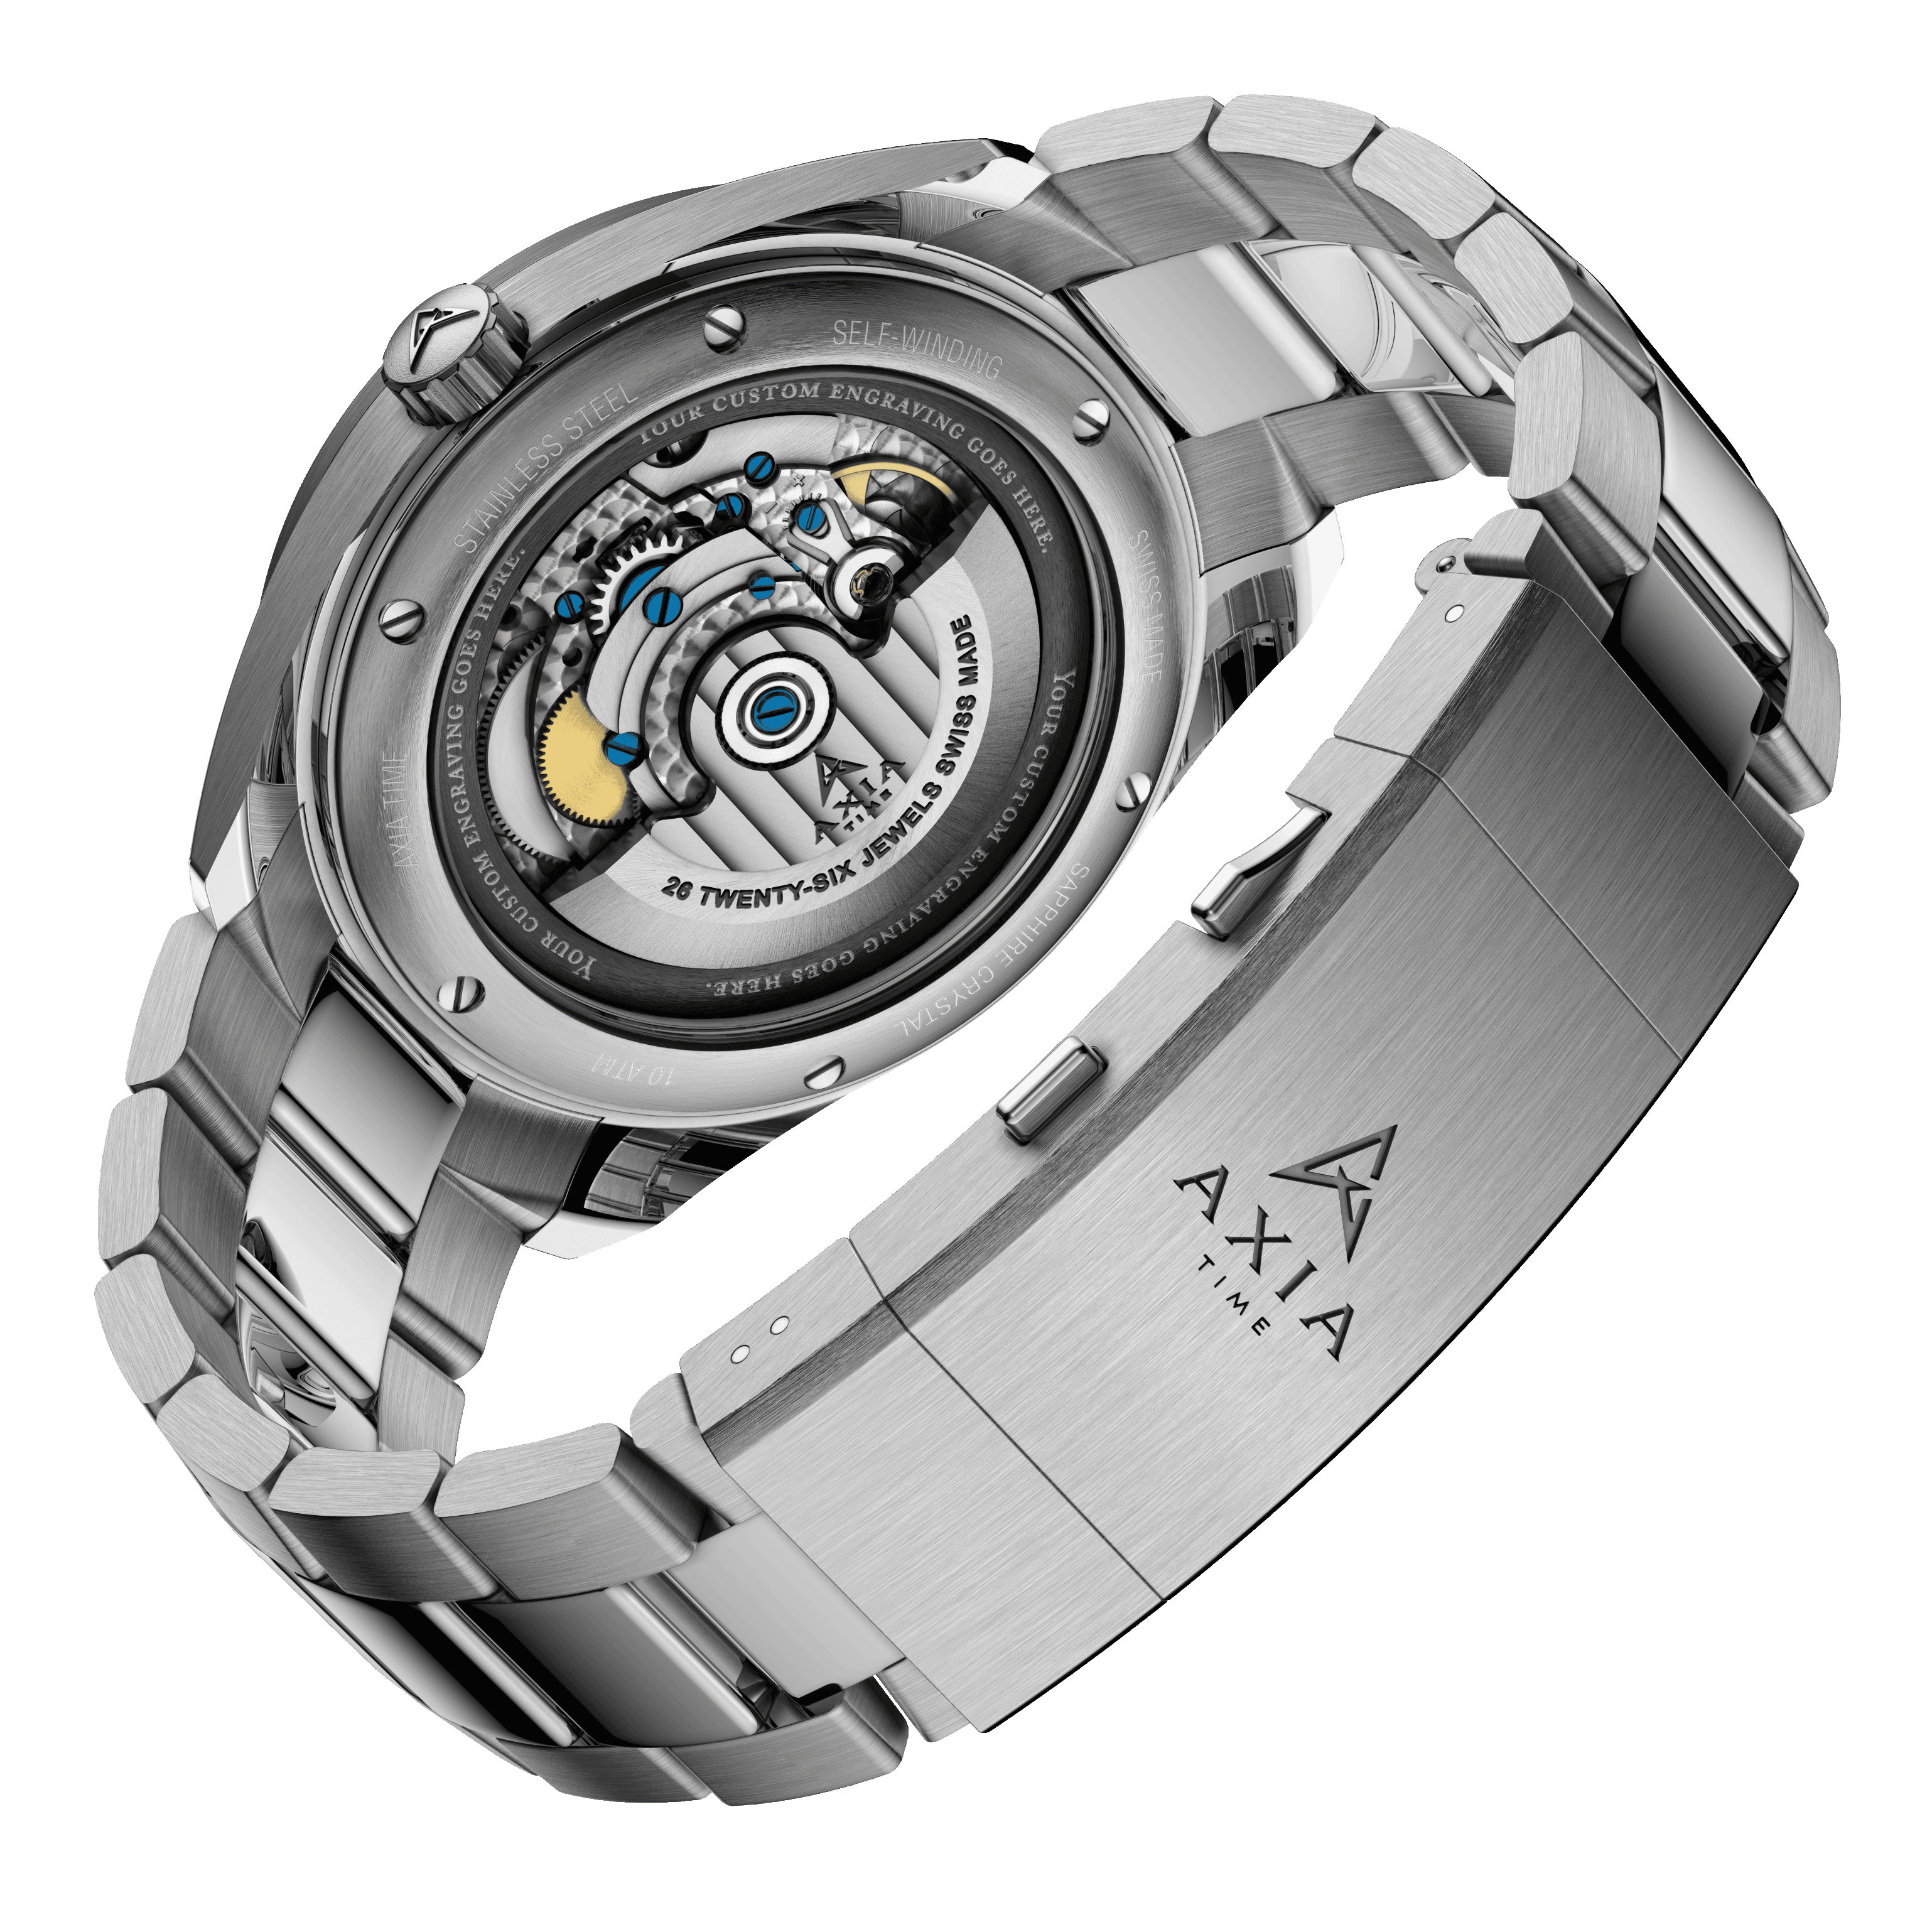 AXIA Time Kairos II Skoura edition swiss made automatic watch